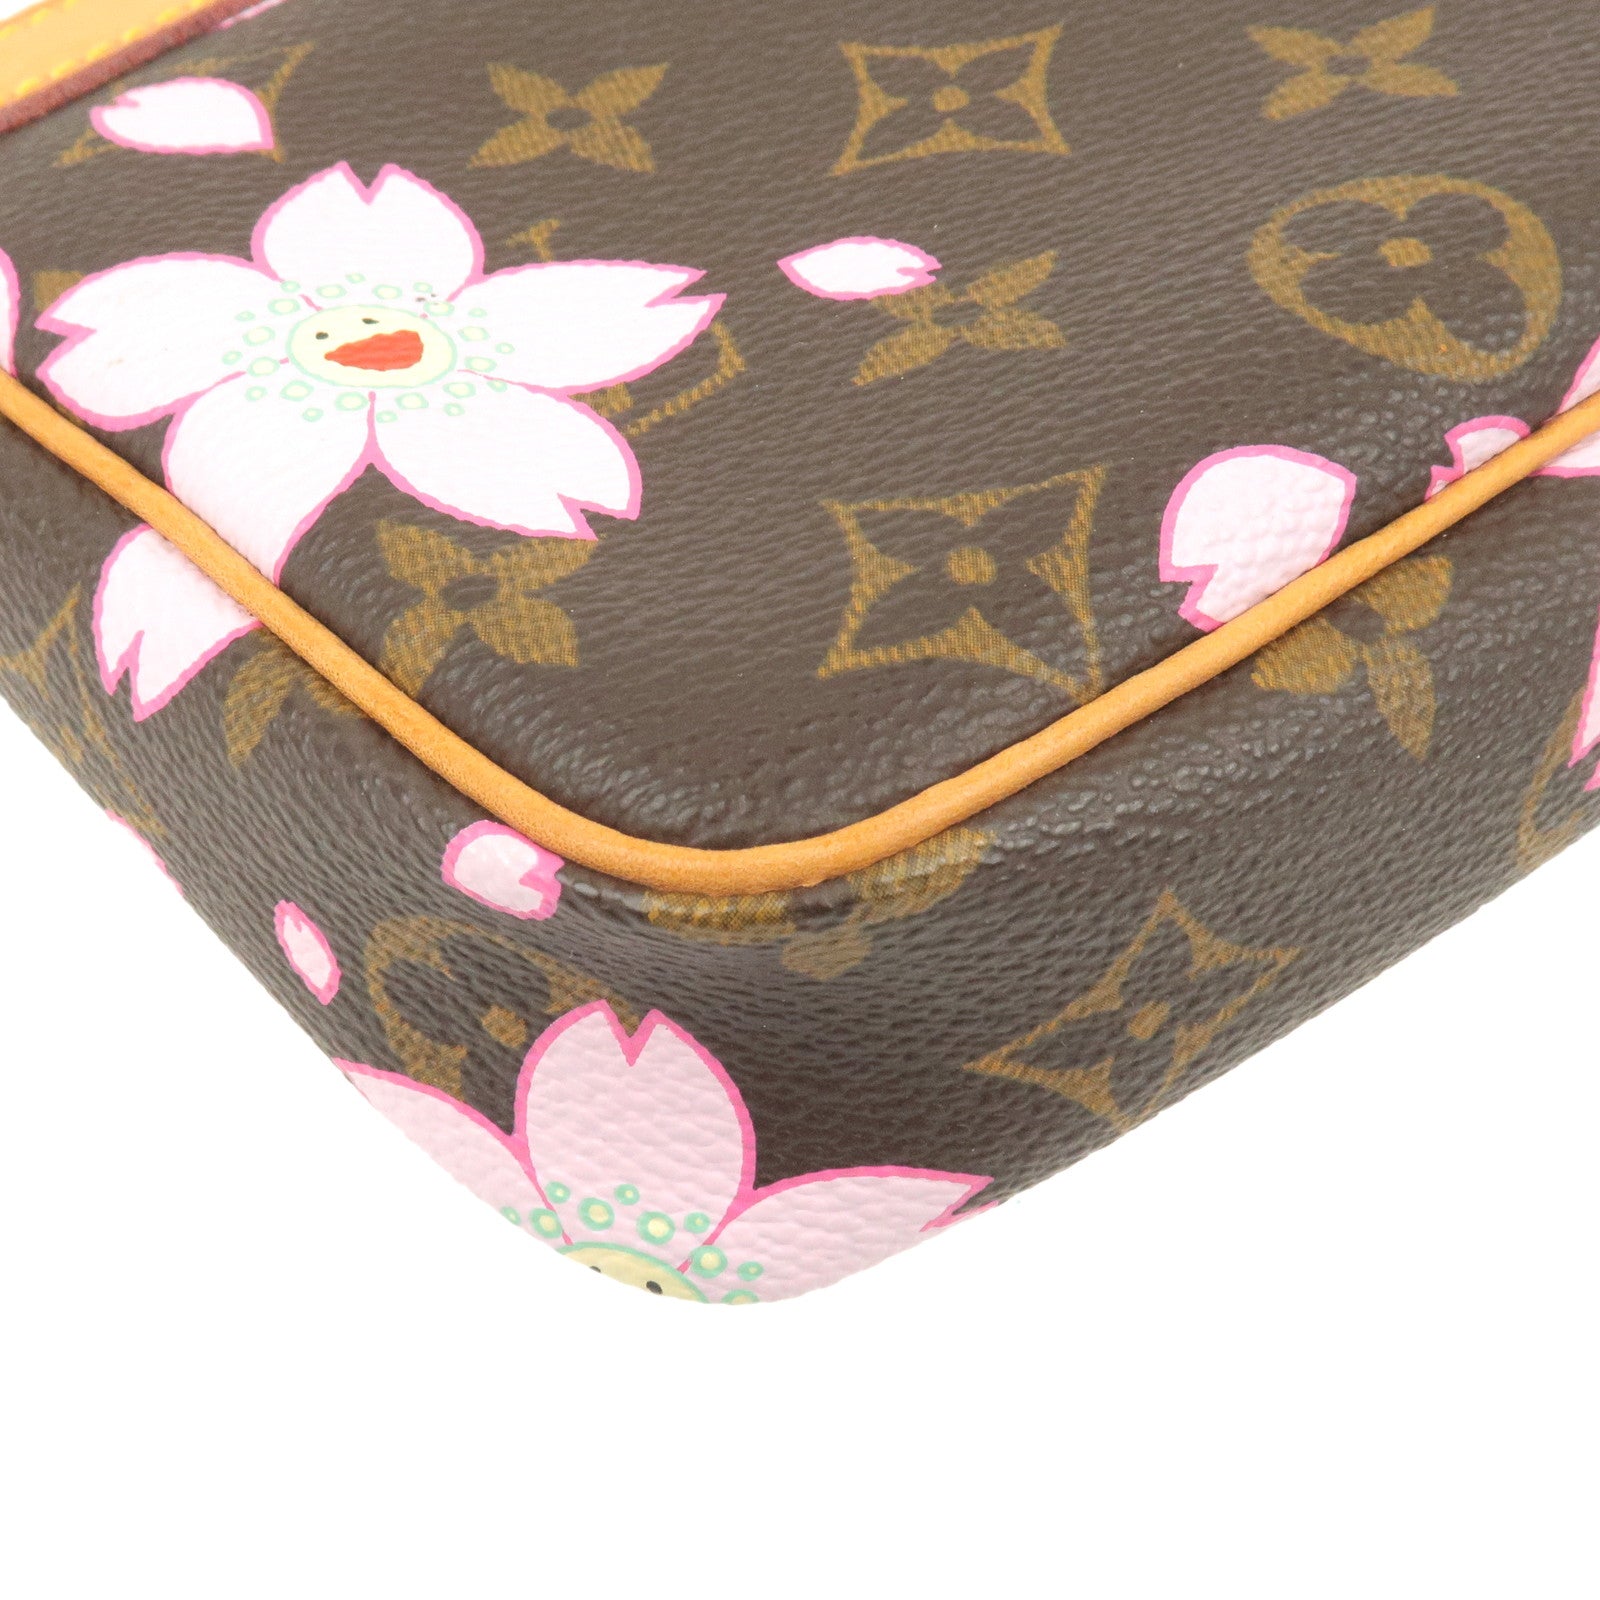 Louis Vuitton Monogram Cherry Blossom Speedy